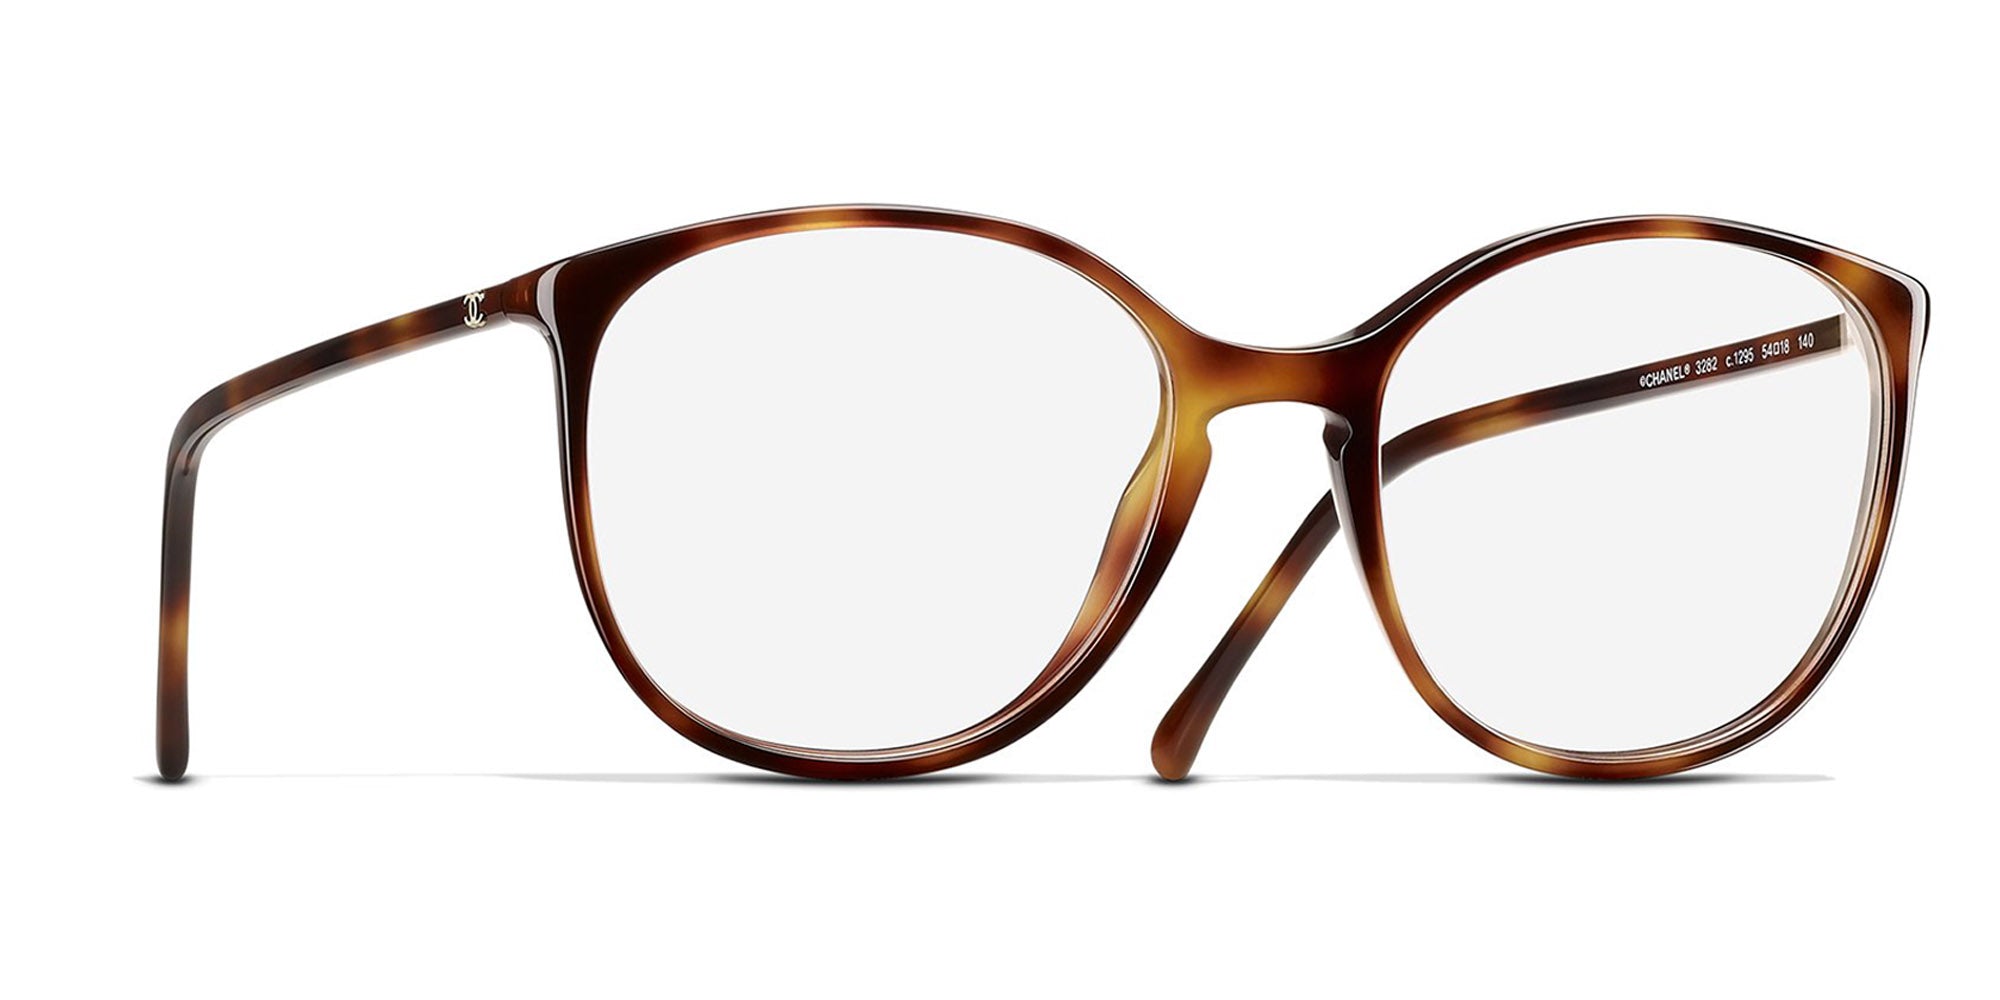 dekorere Telegraf Sorg CHANEL 3282 Round Acetate Glasses | Fashion Eyewear AU